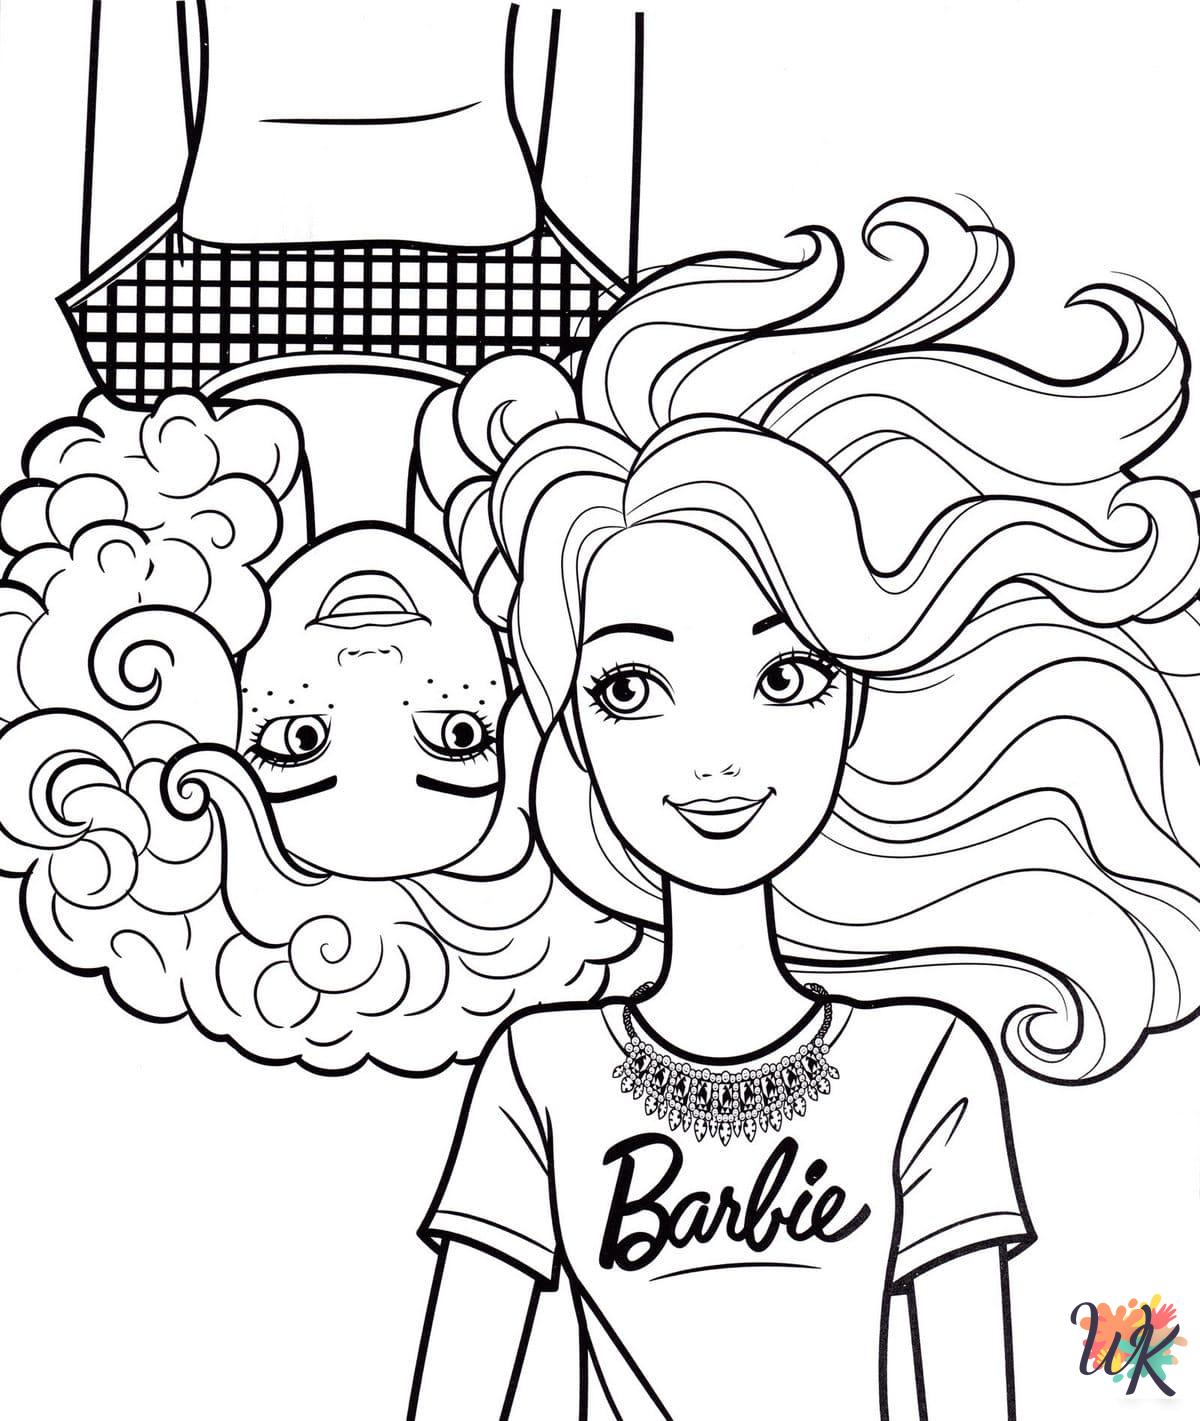 Barbie decorations coloring pages